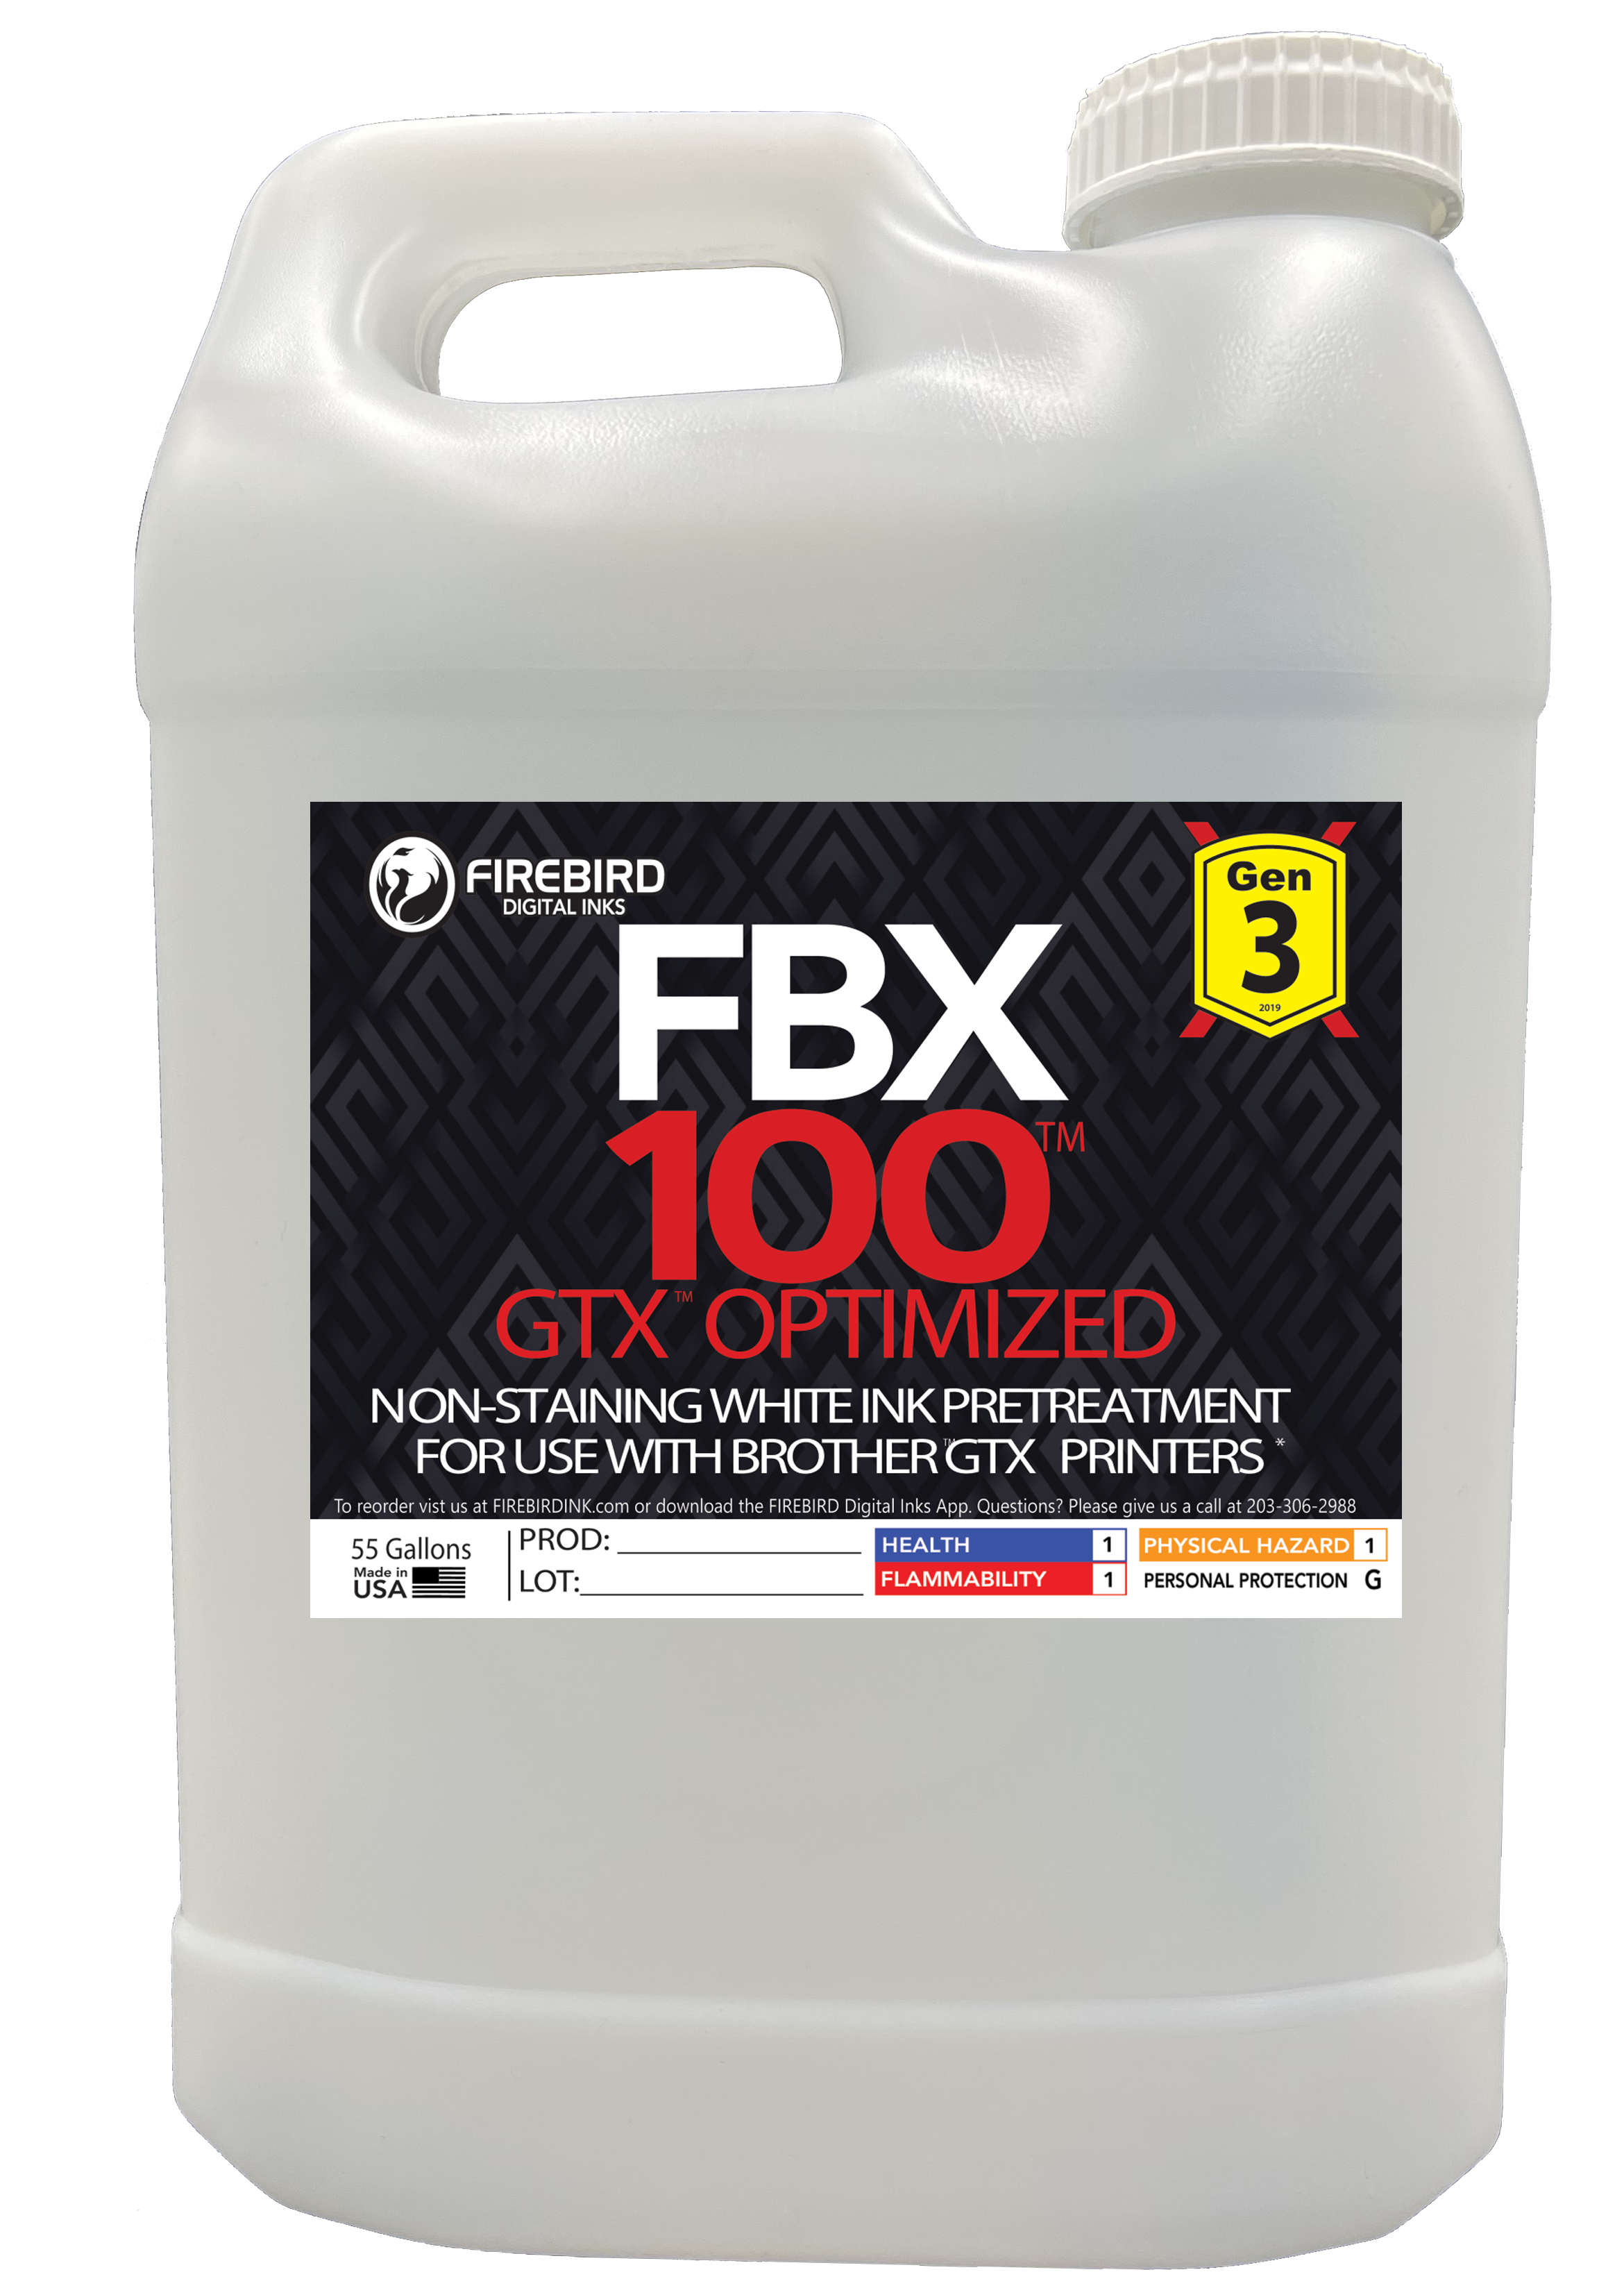 FBX-100 Gen3 GTX Optimized DTG Pretreatment